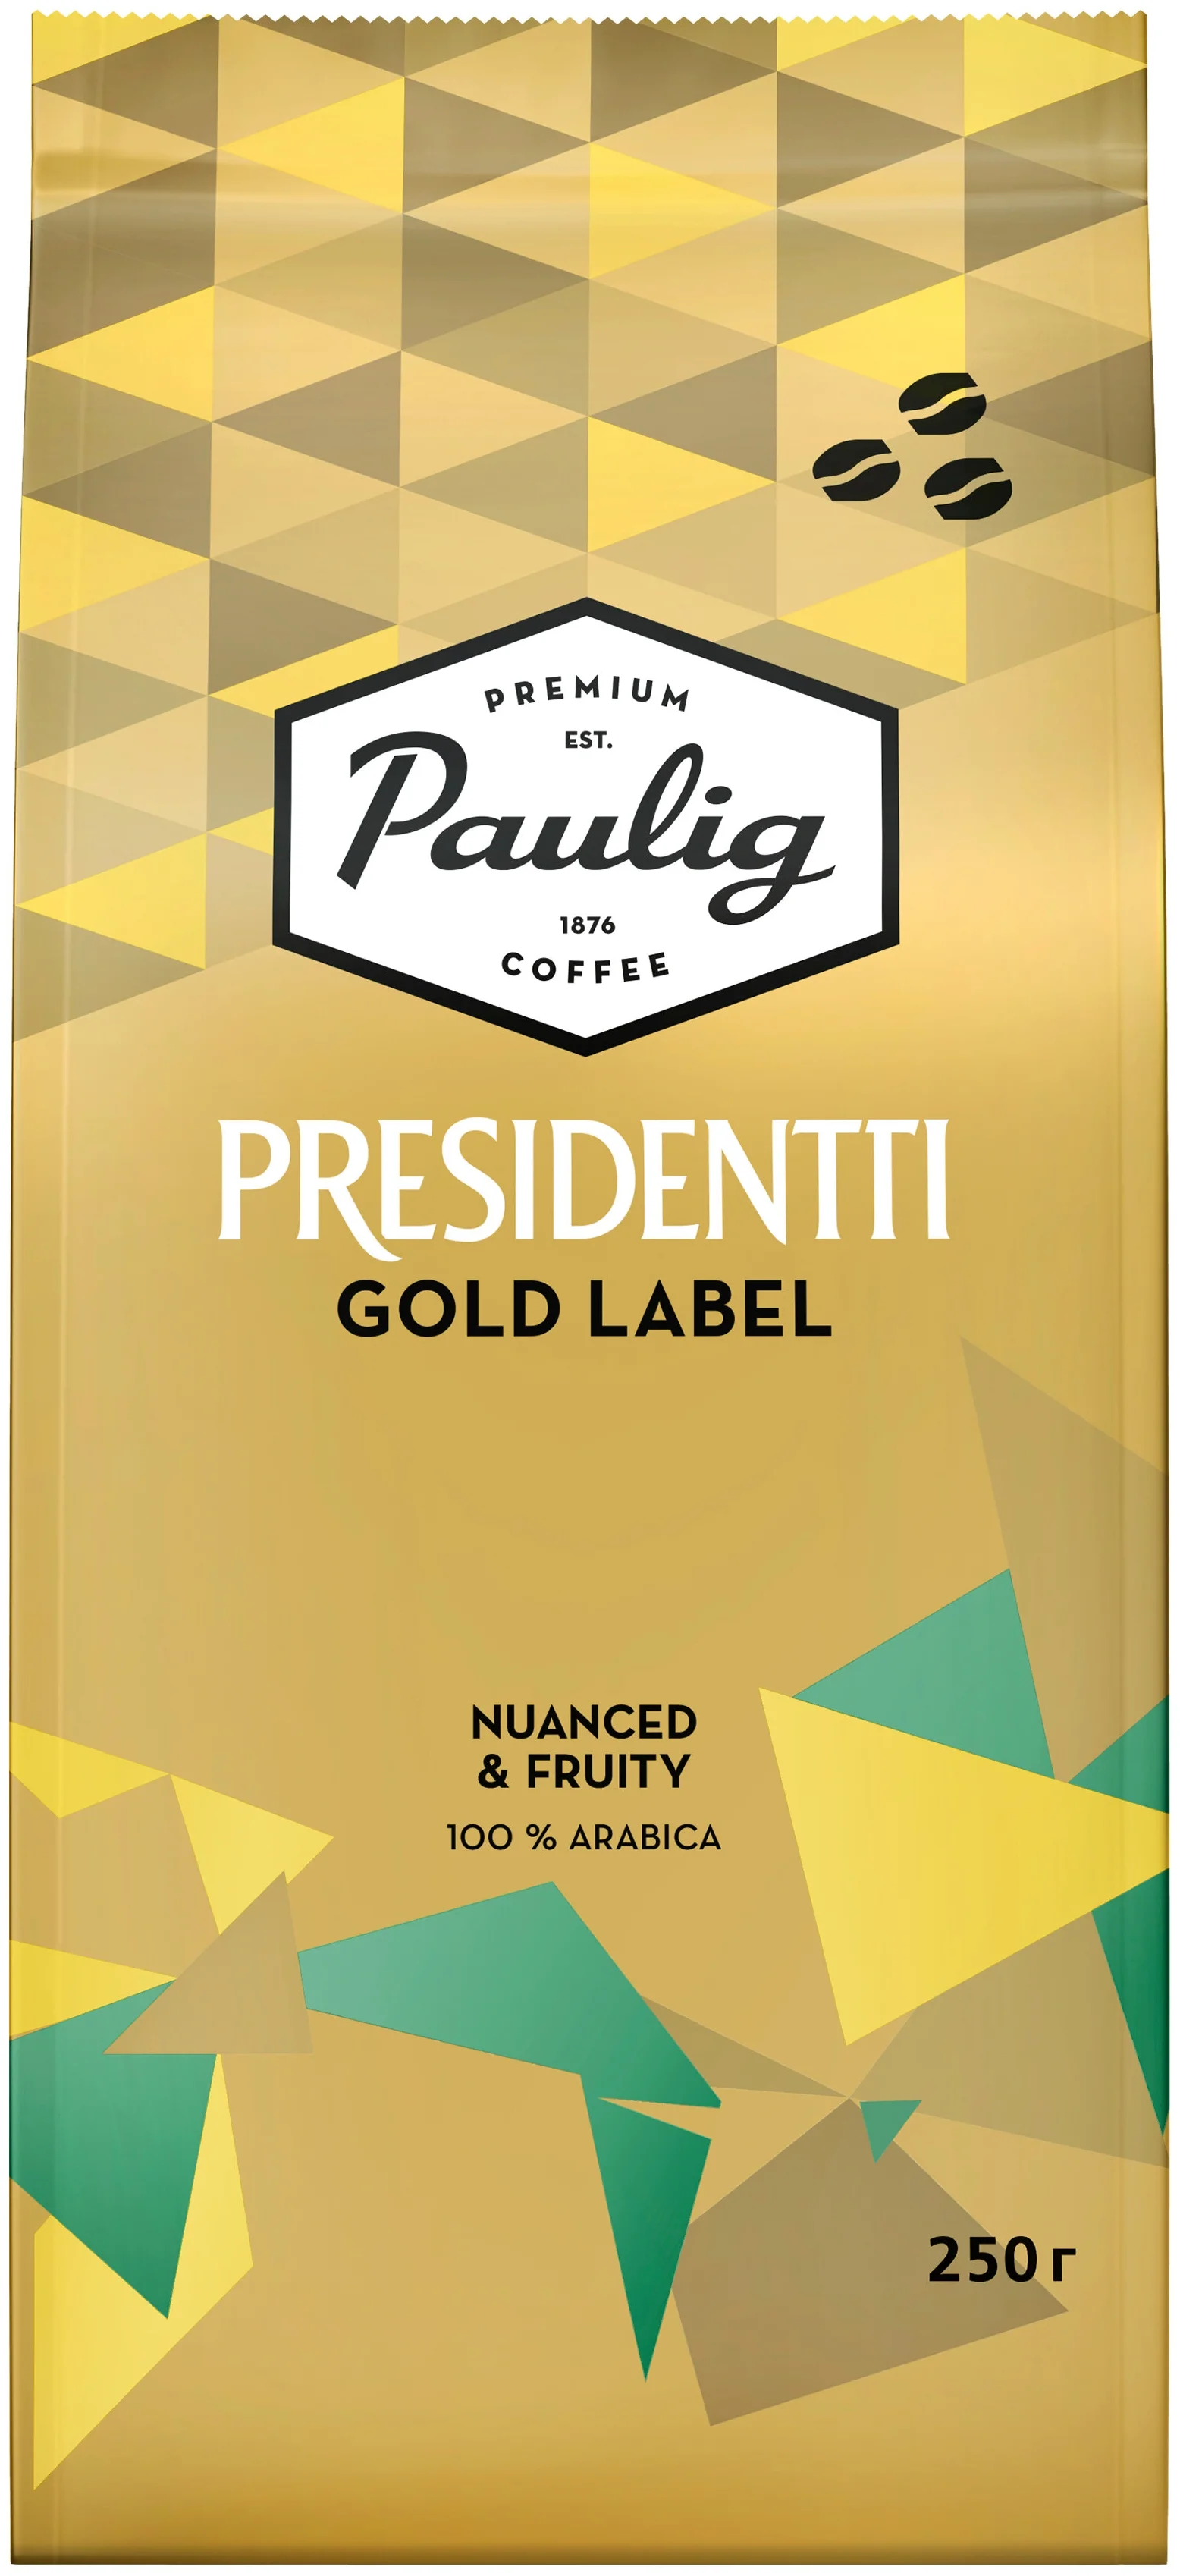 Paulig Presidentti Gold Label - обжарка: светлая